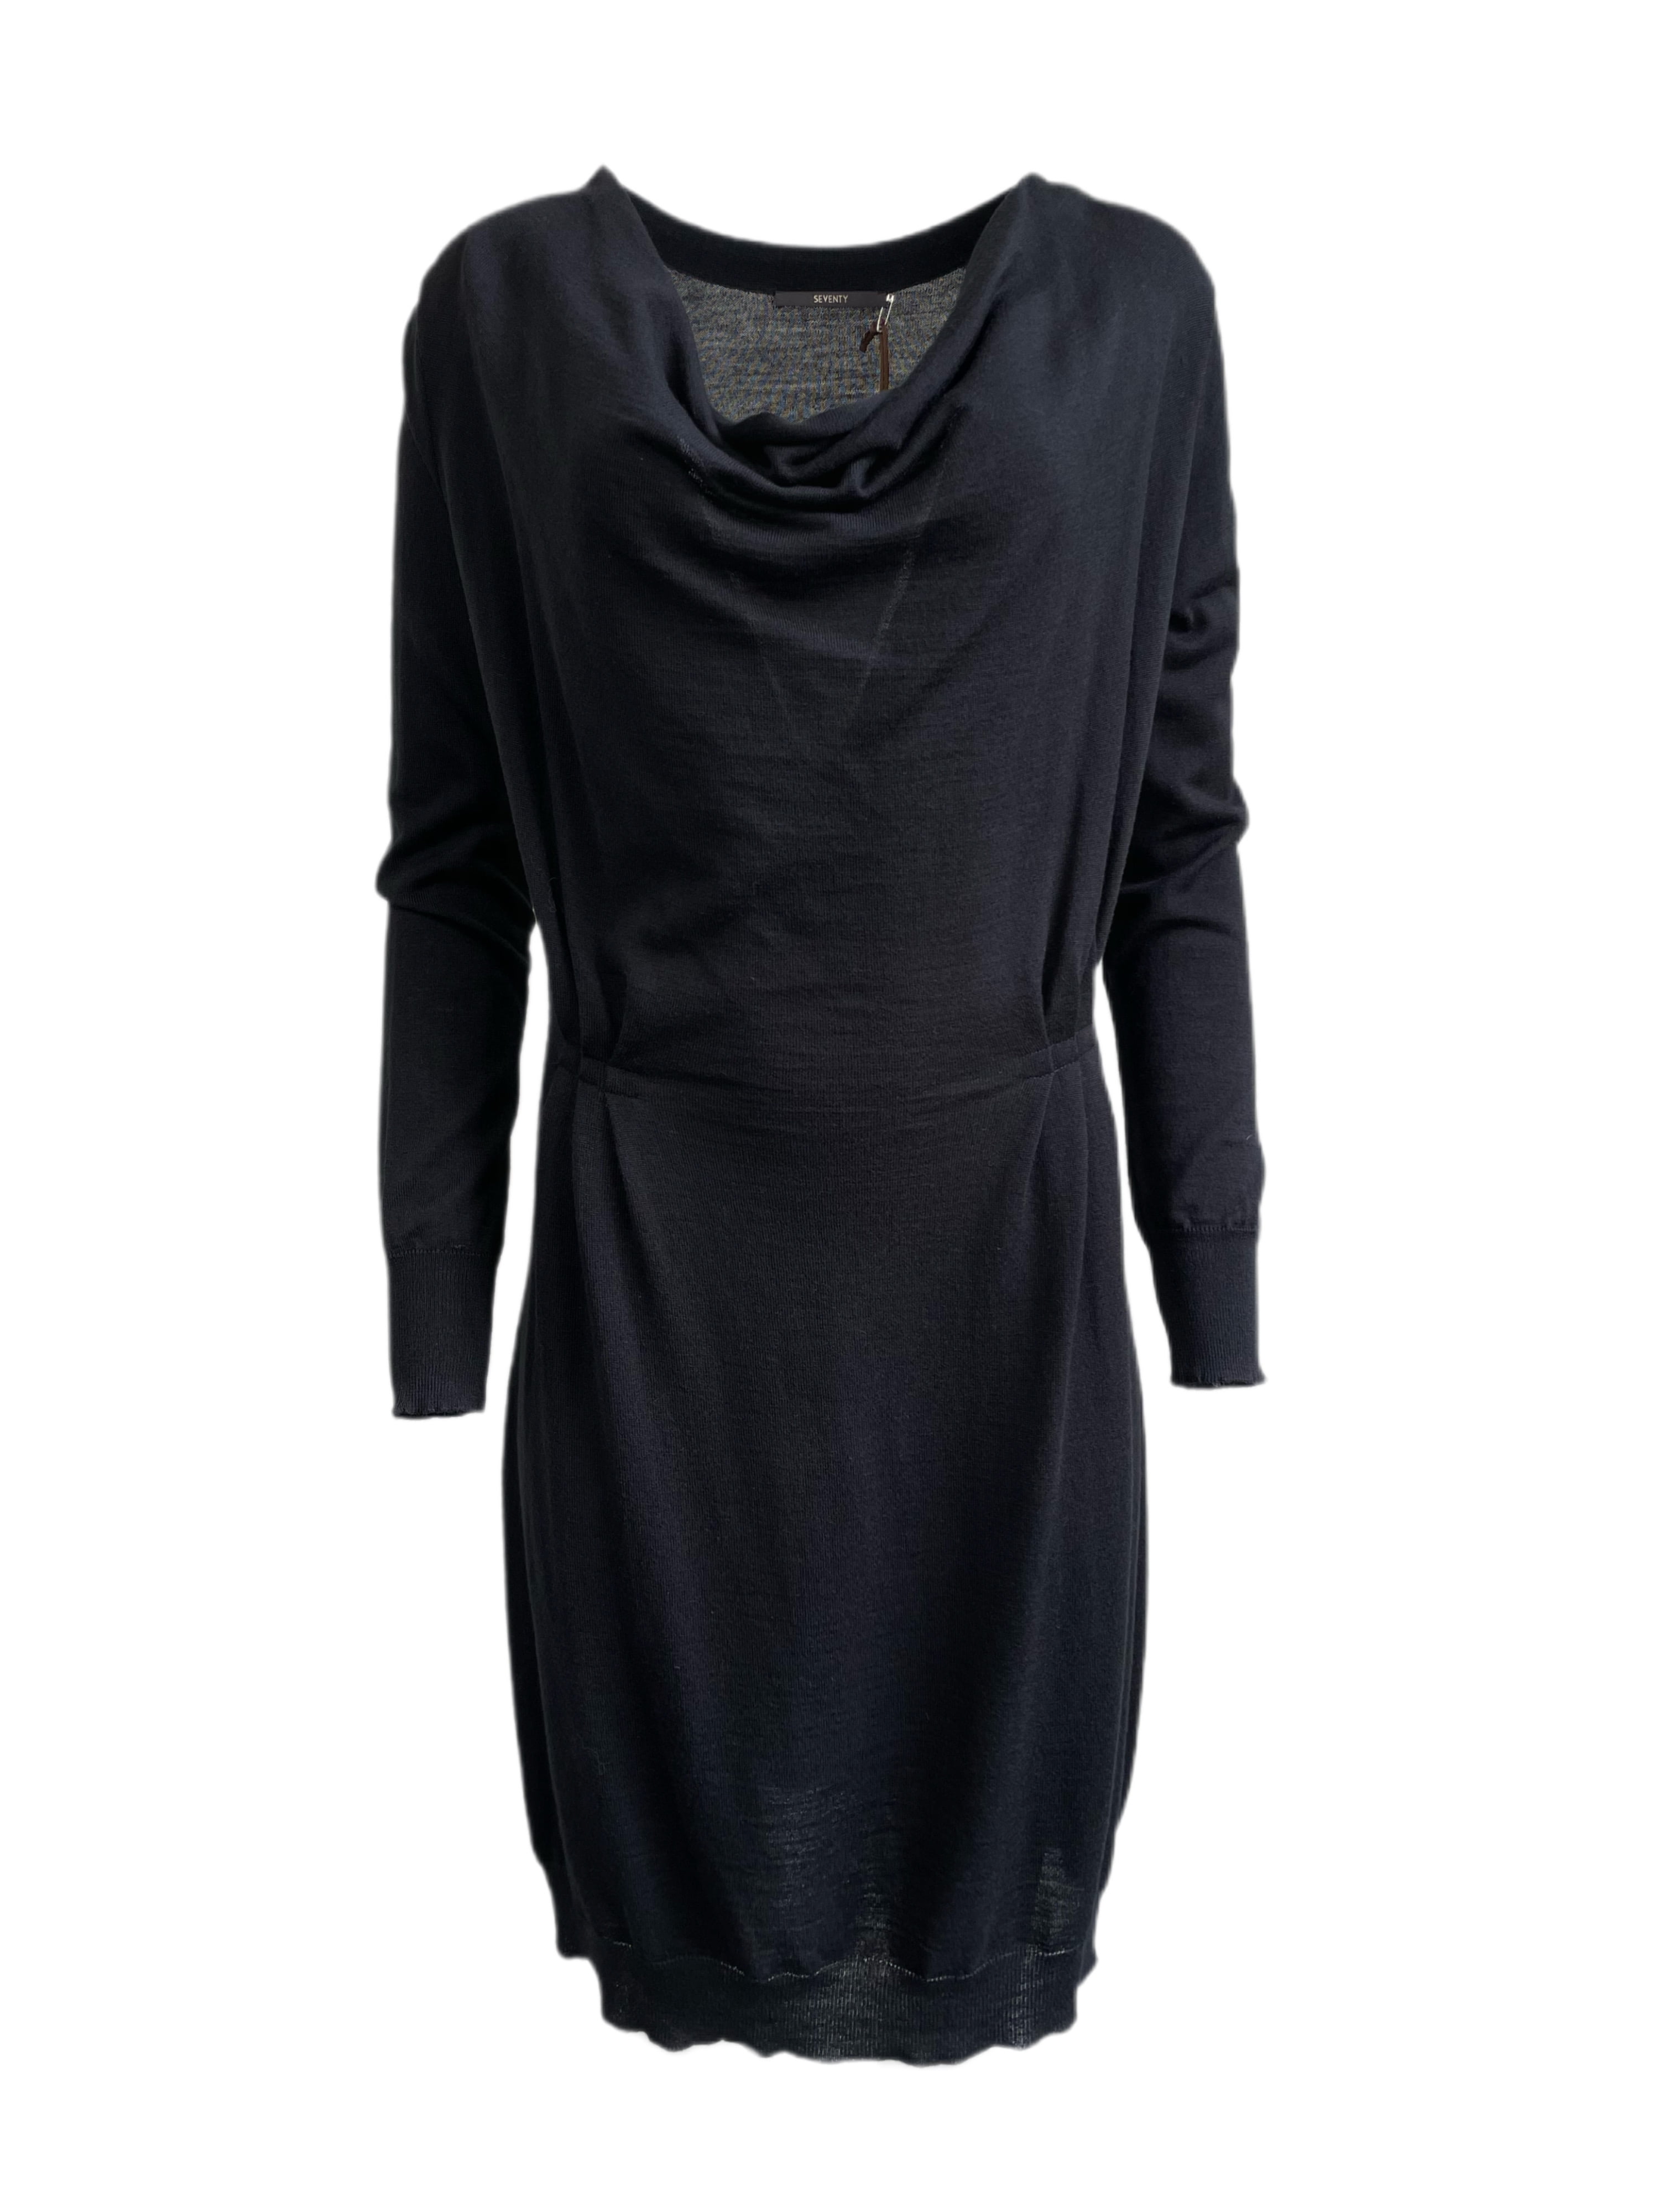 SEVENTY Women's Cowl Neck Long Sleeve Dress IT 40 Black - Walmart.com